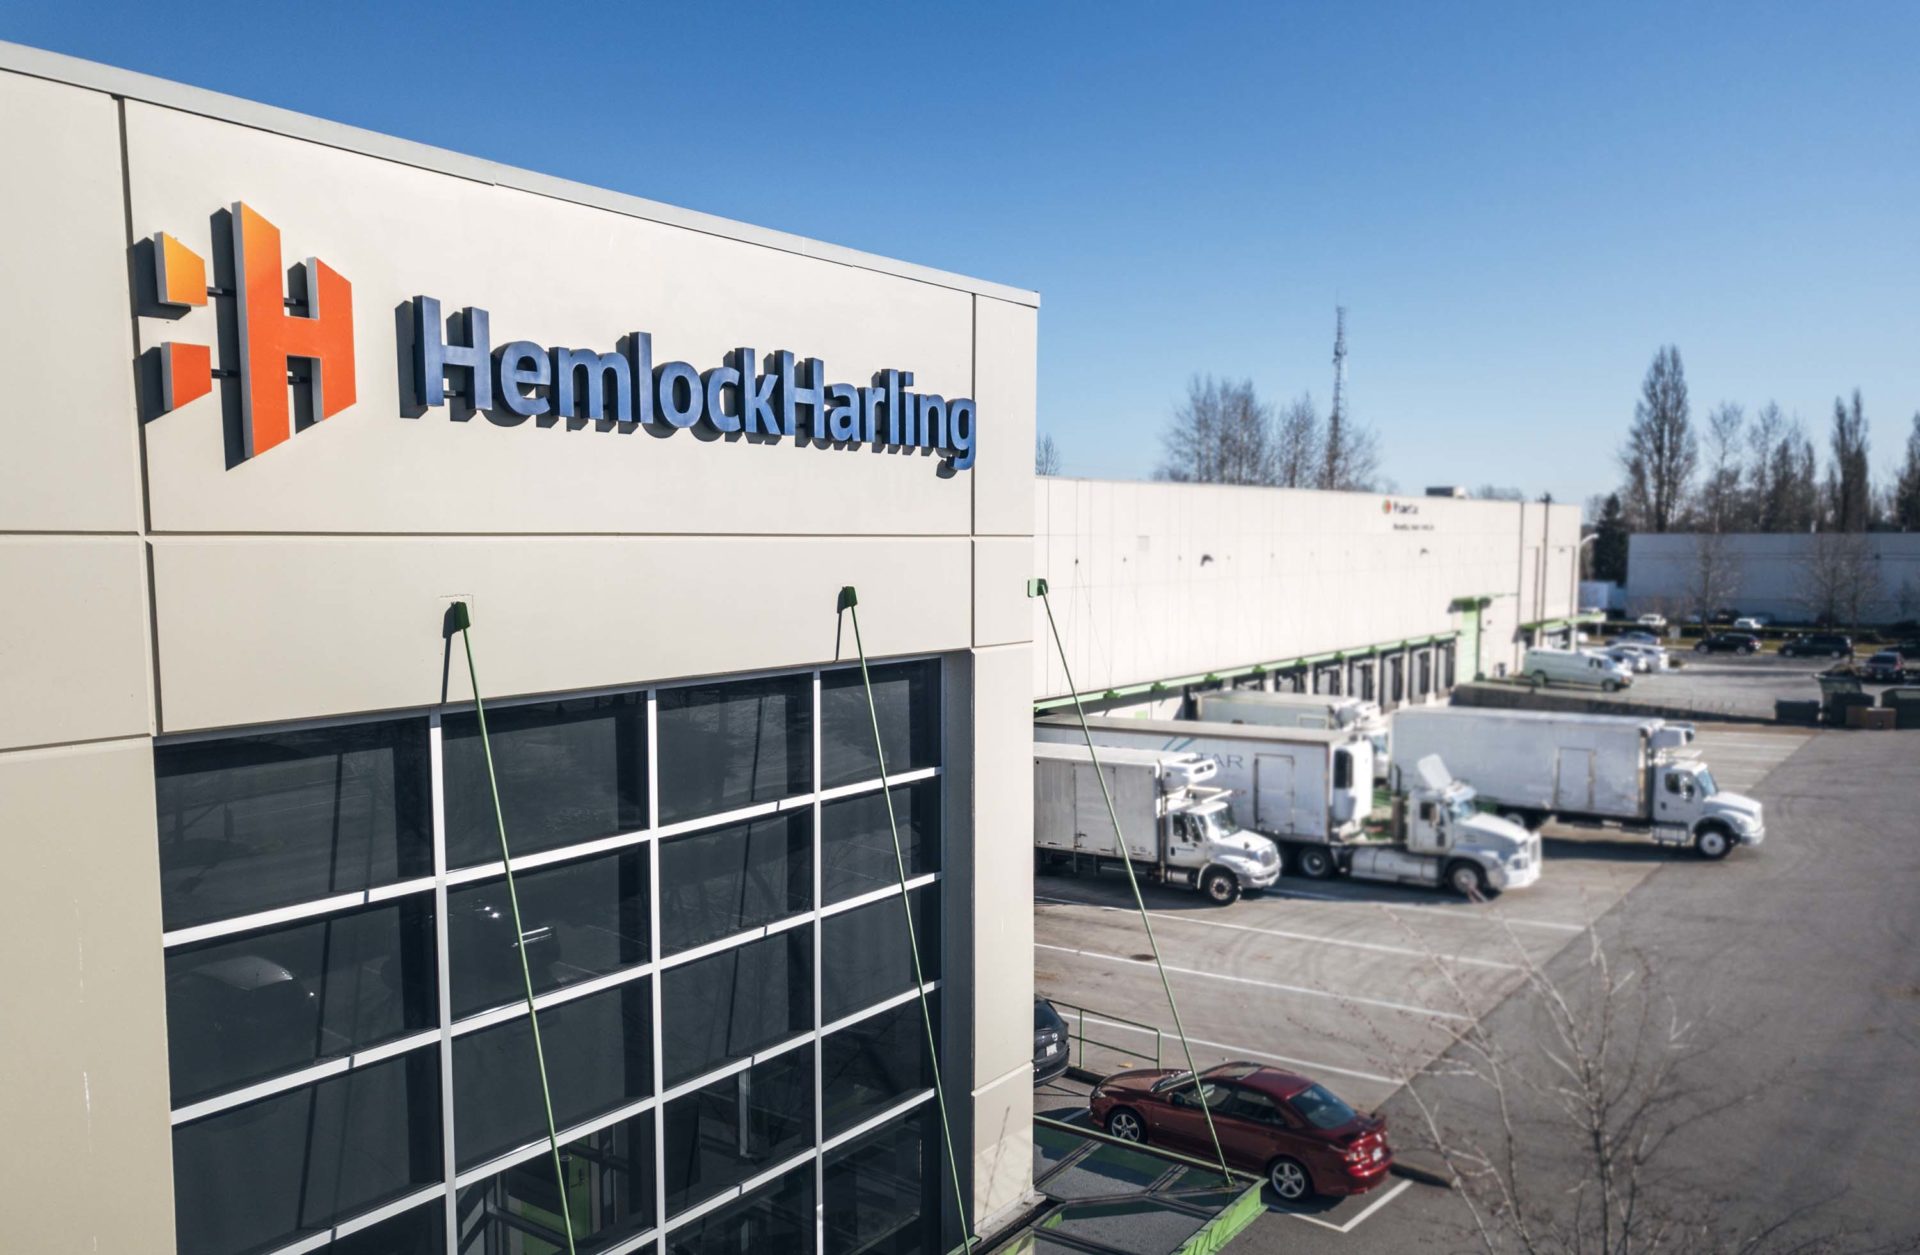 Hemlock harling facility